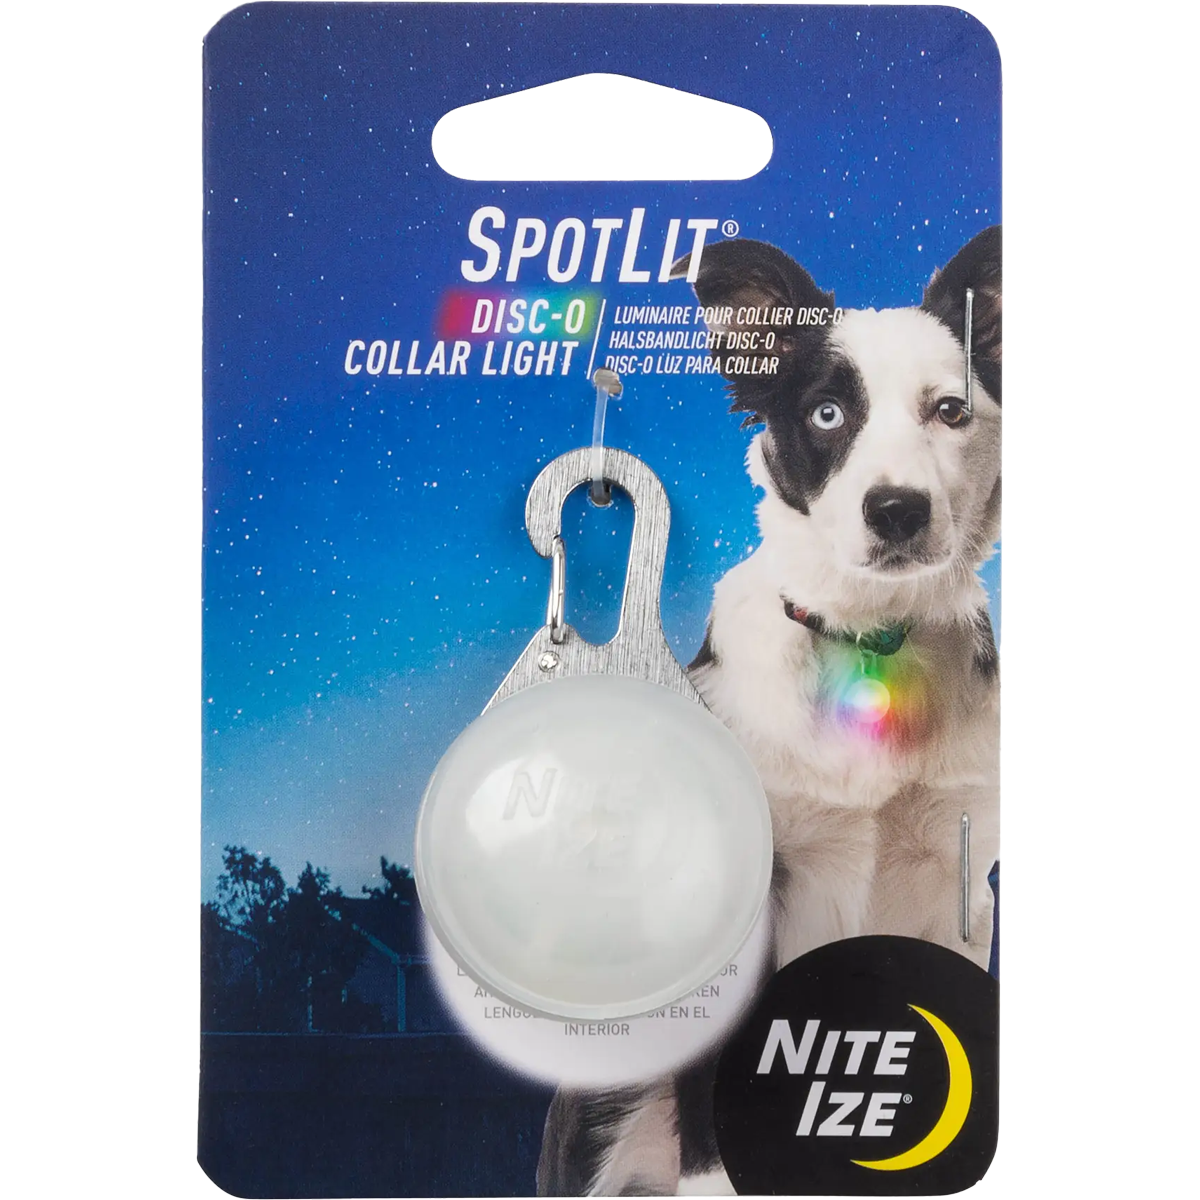 SpotLit Collar Light alternate view